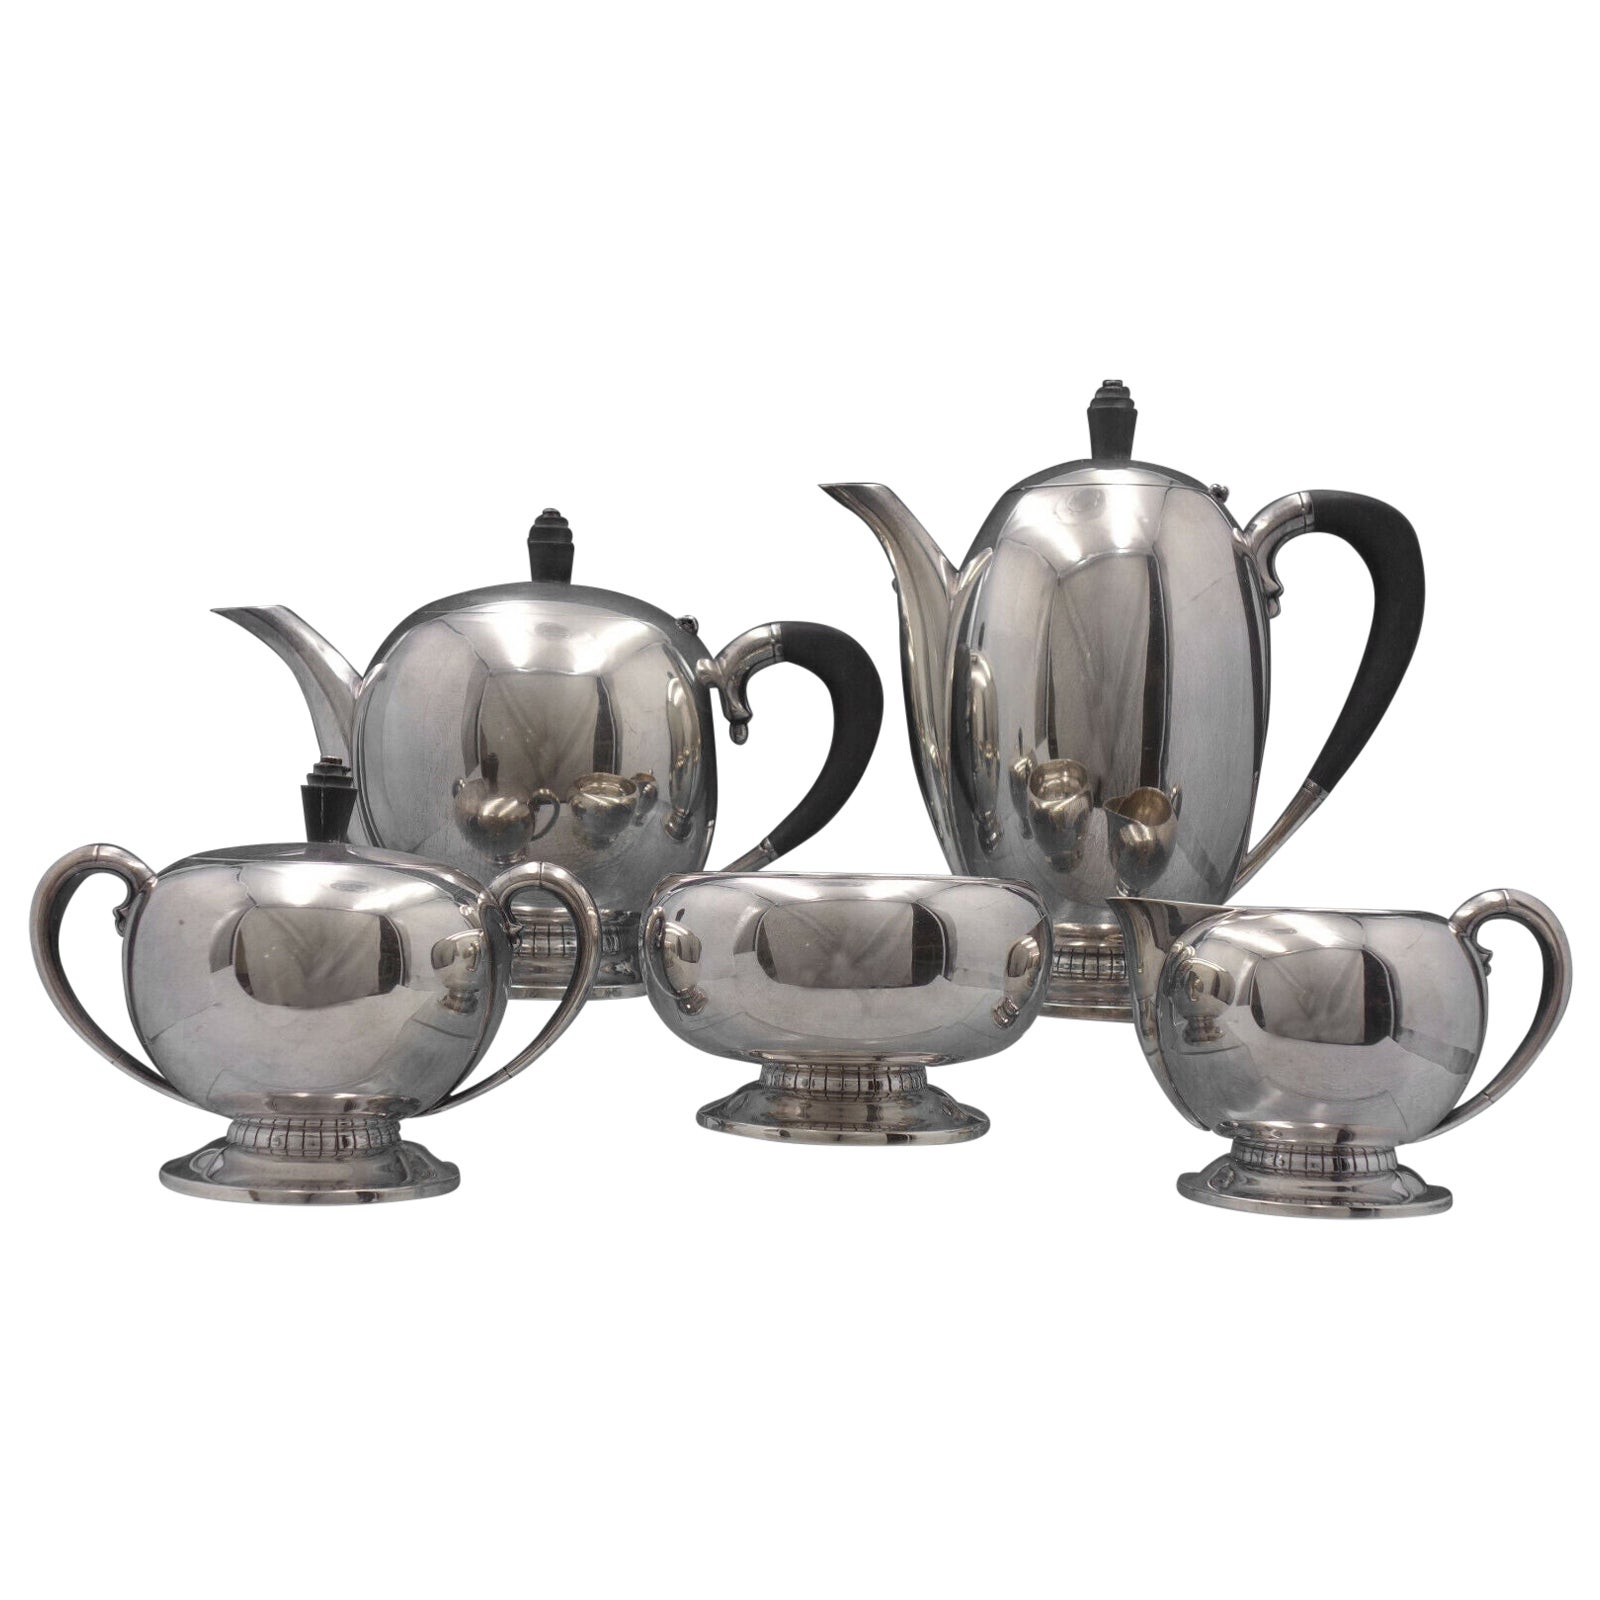 Tuttle Silver Company Tea Sets